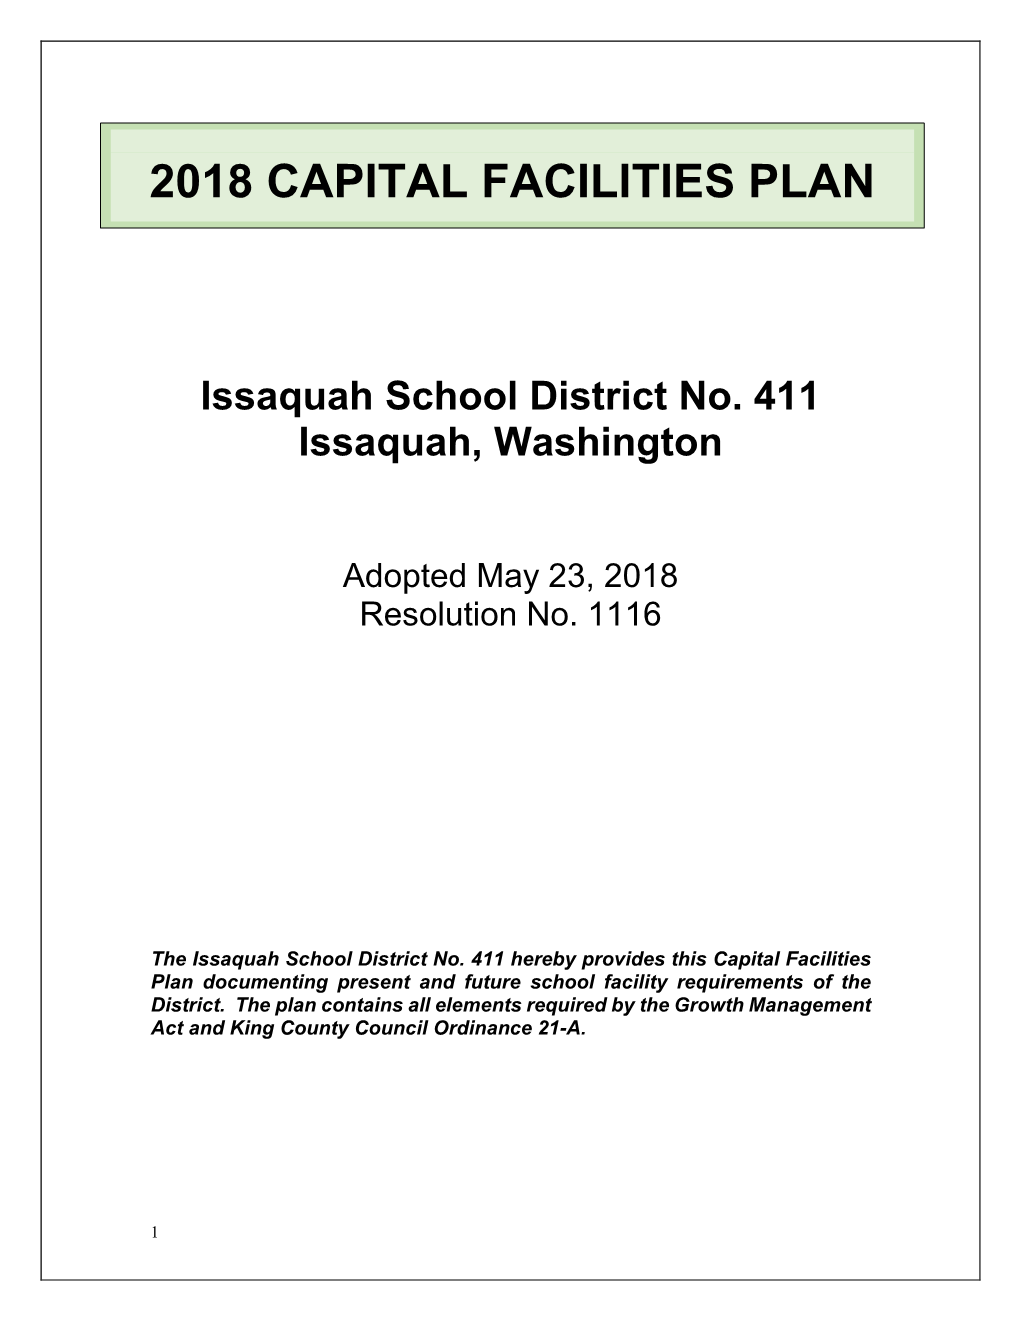 2018 Capital Facilities Plan